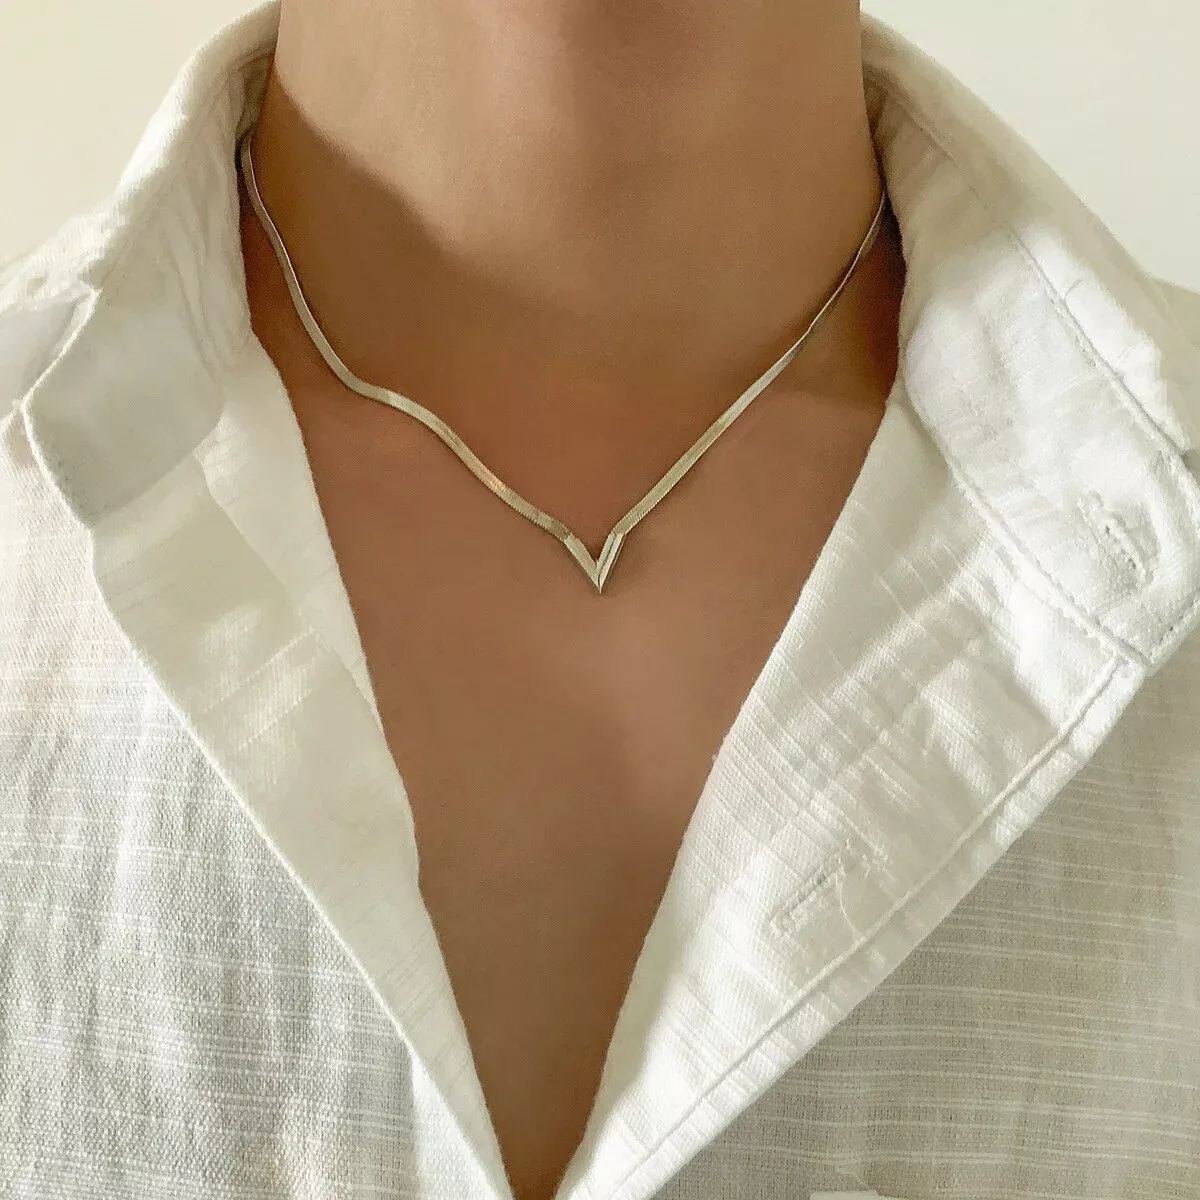 Stylish V-Shaped Chain Necklace